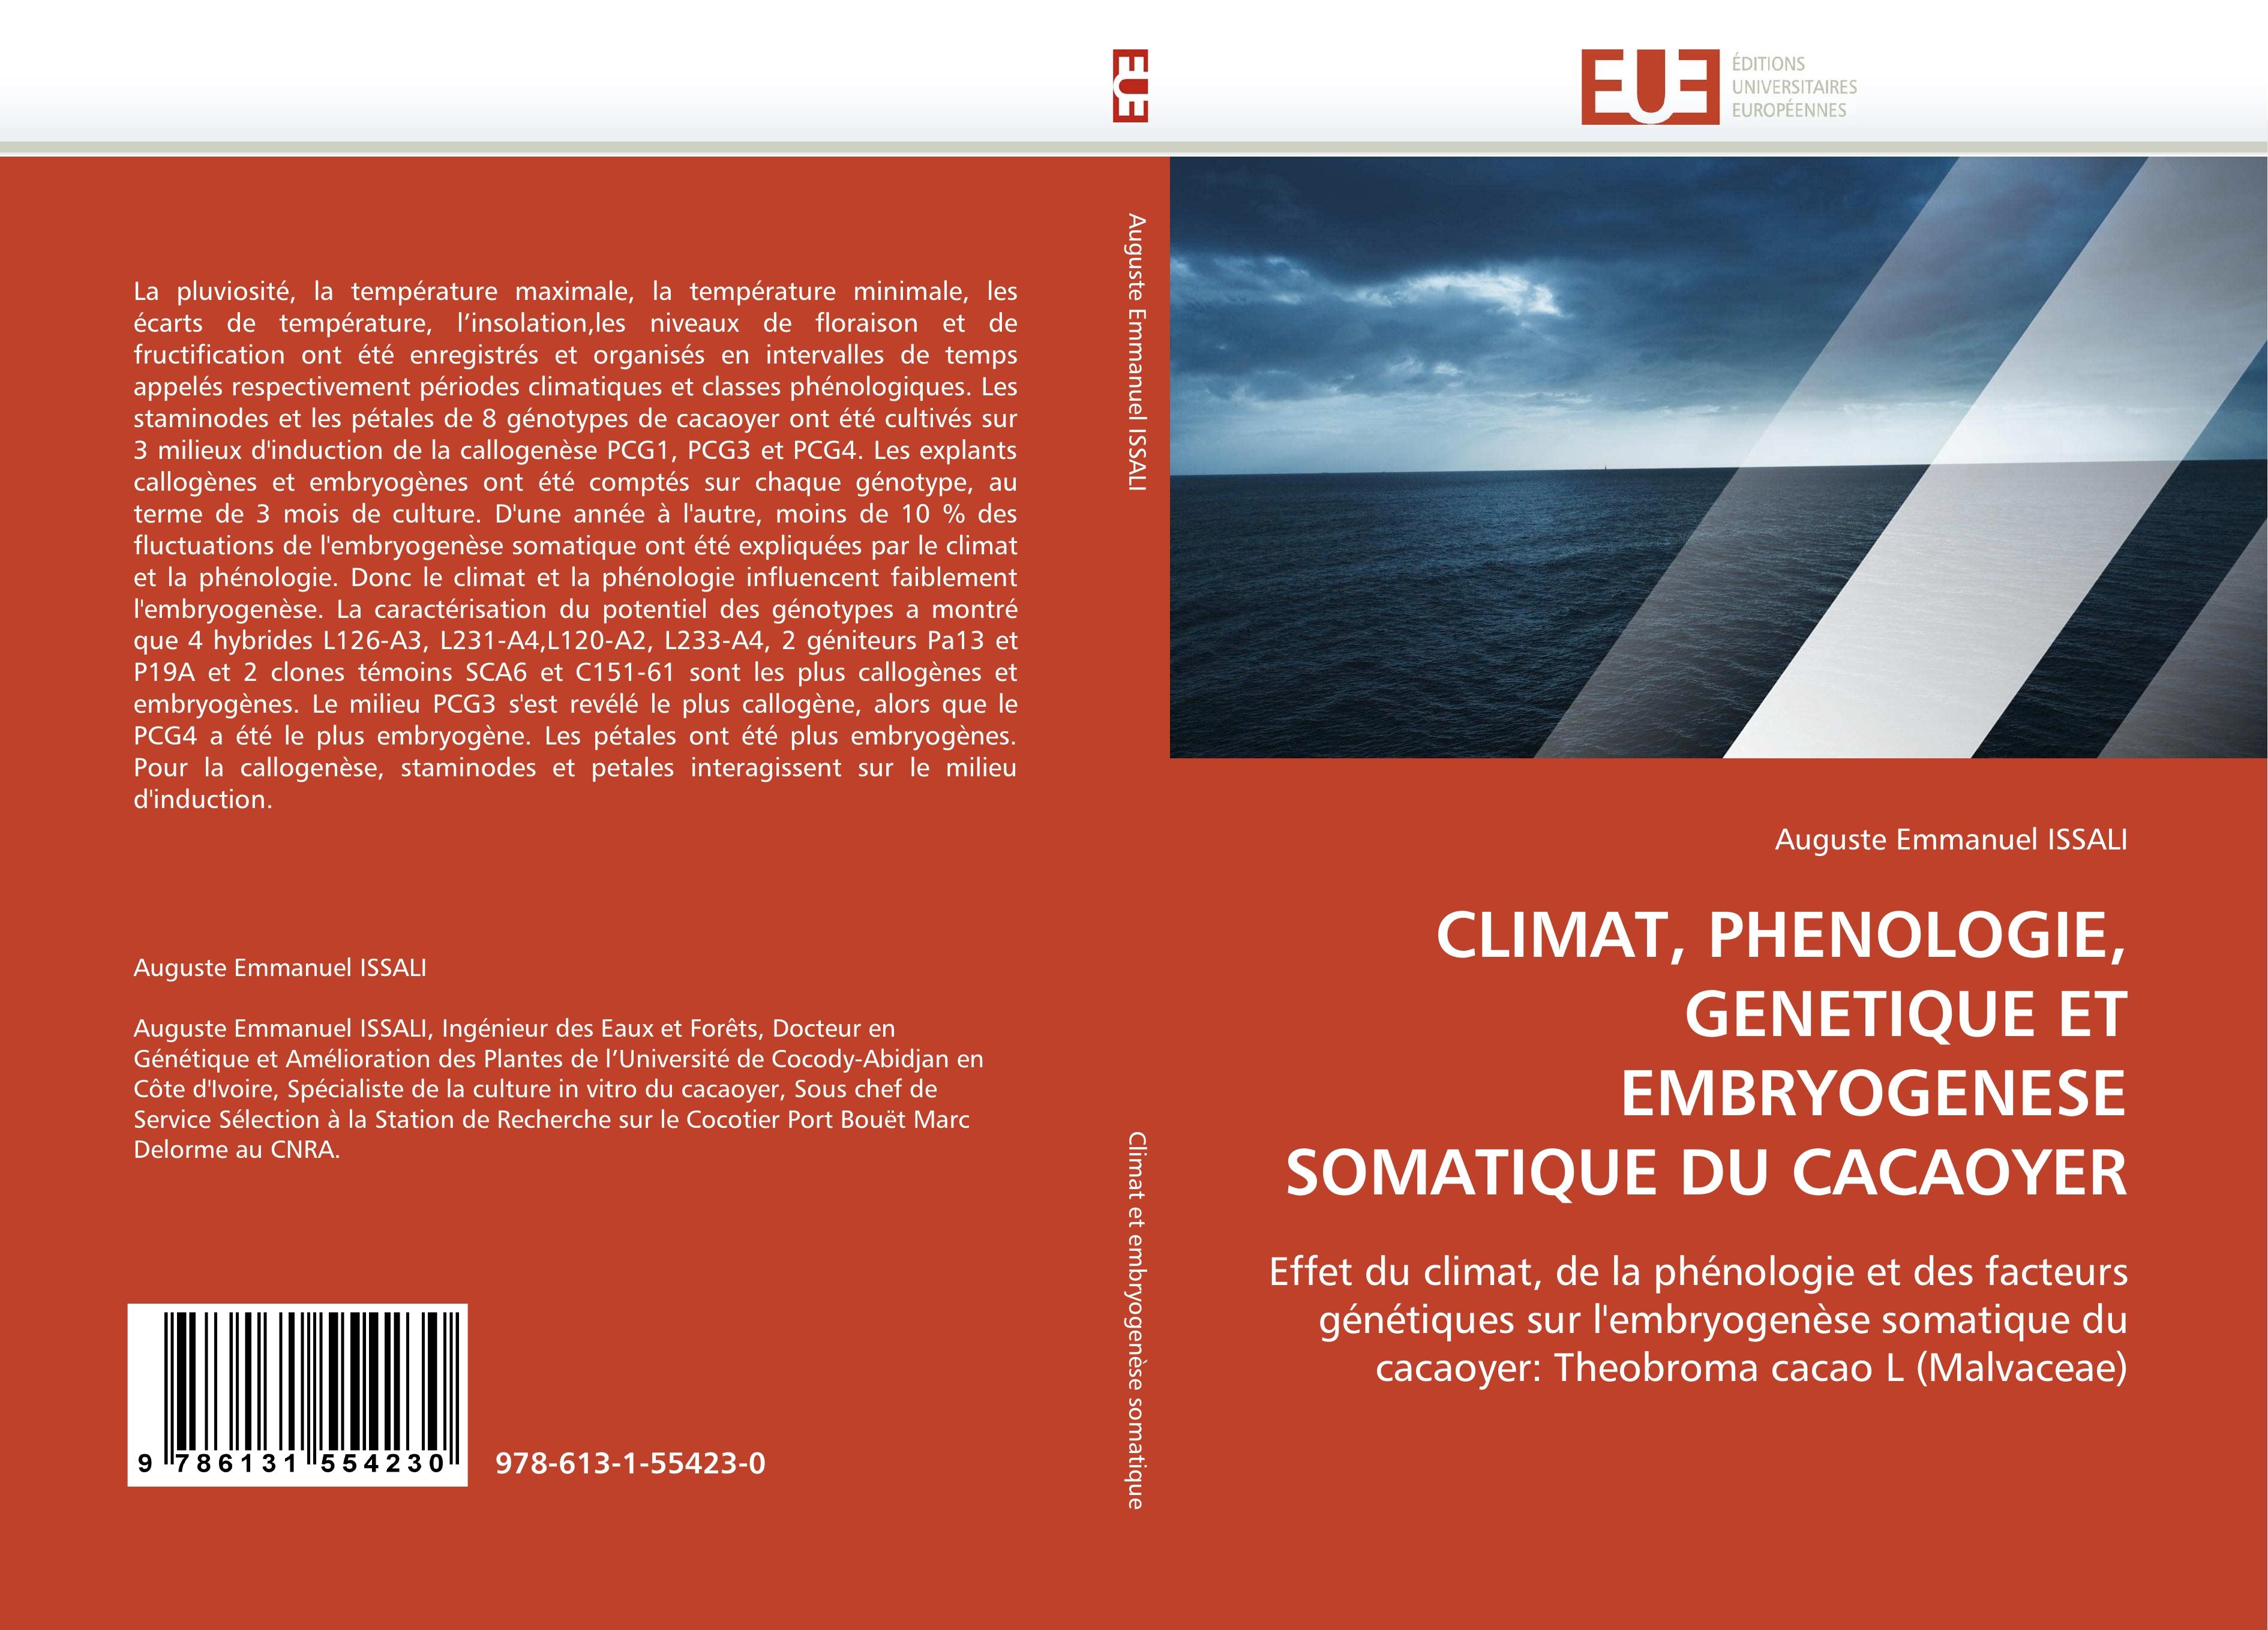 CLIMAT, PHENOLOGIE, GENETIQUE ET EMBRYOGENESE SOMATIQUE DU CACAOYER - Auguste Emmanuel ISSALI